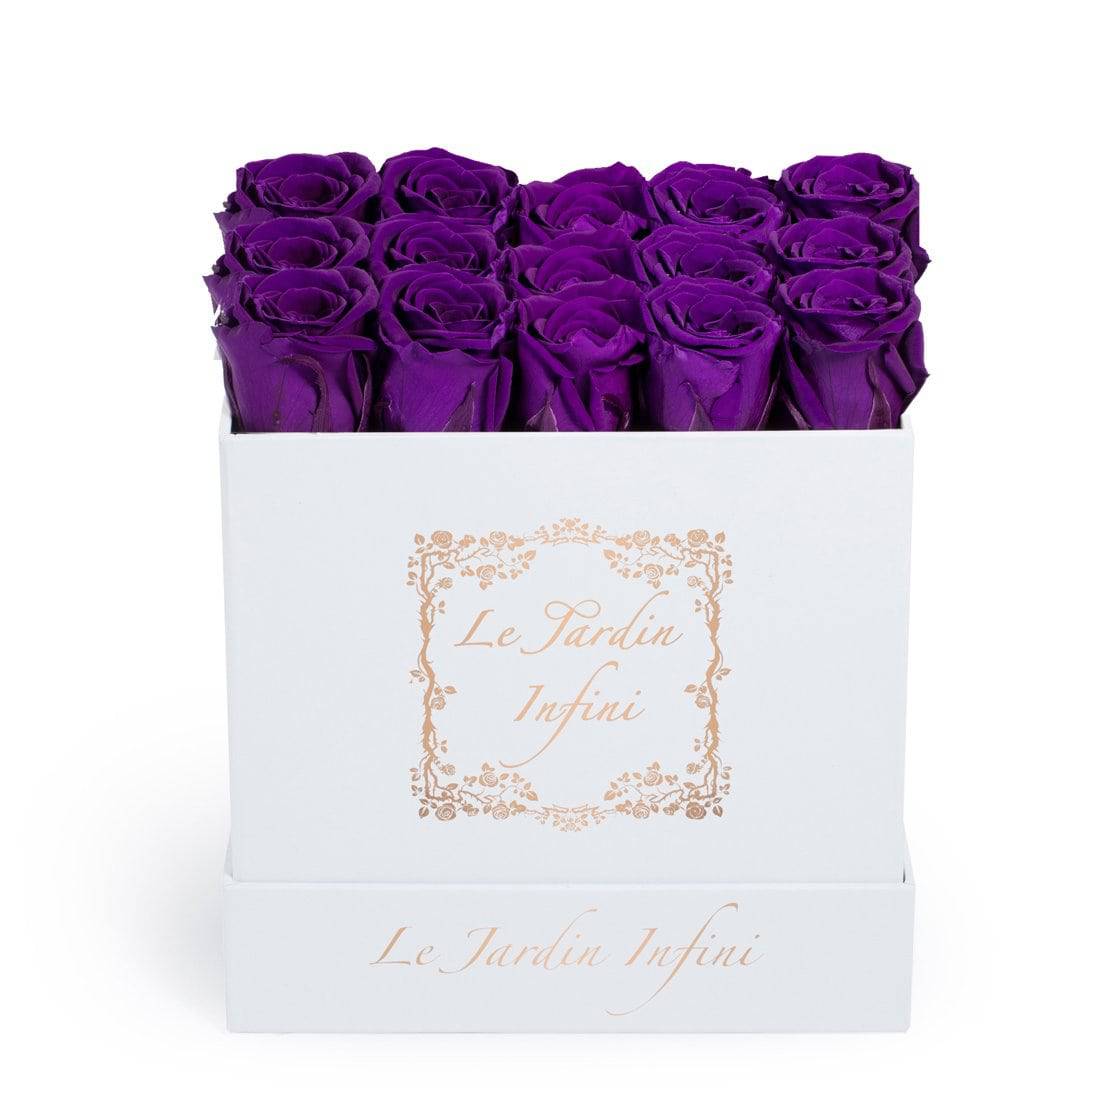 Vibrant Purple Preserved Roses - Medium Square White Box - Le Jardin Infini Roses in a Box